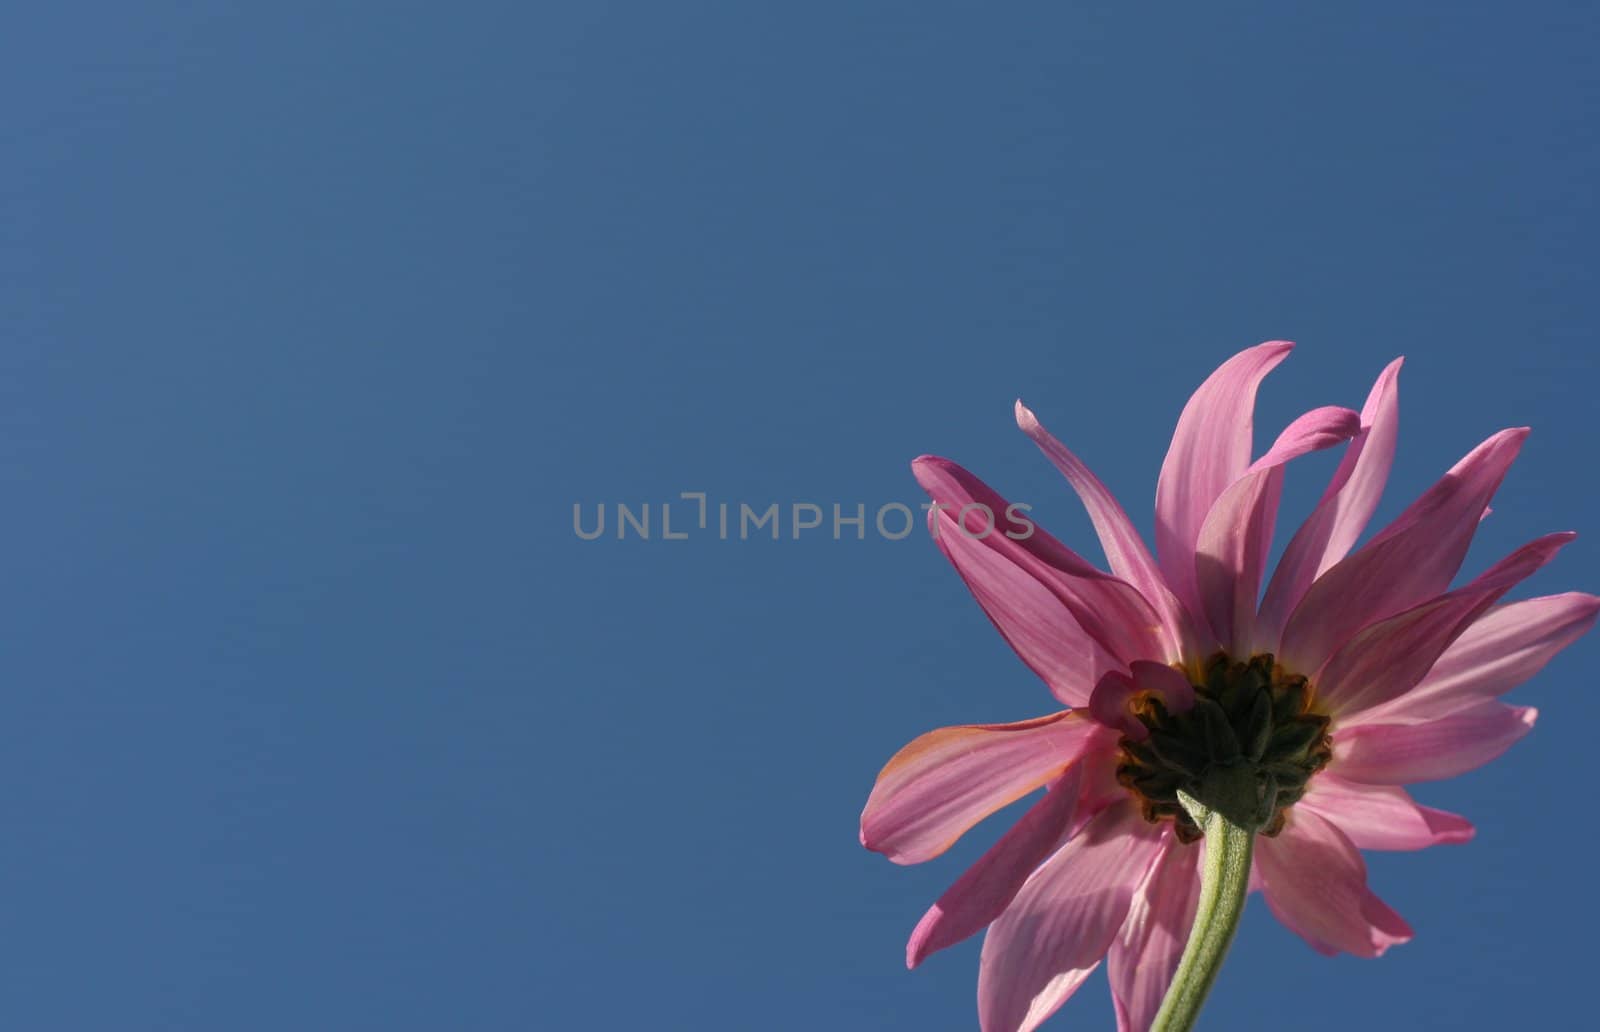 Purple daisy against blue sky by jarenwicklund